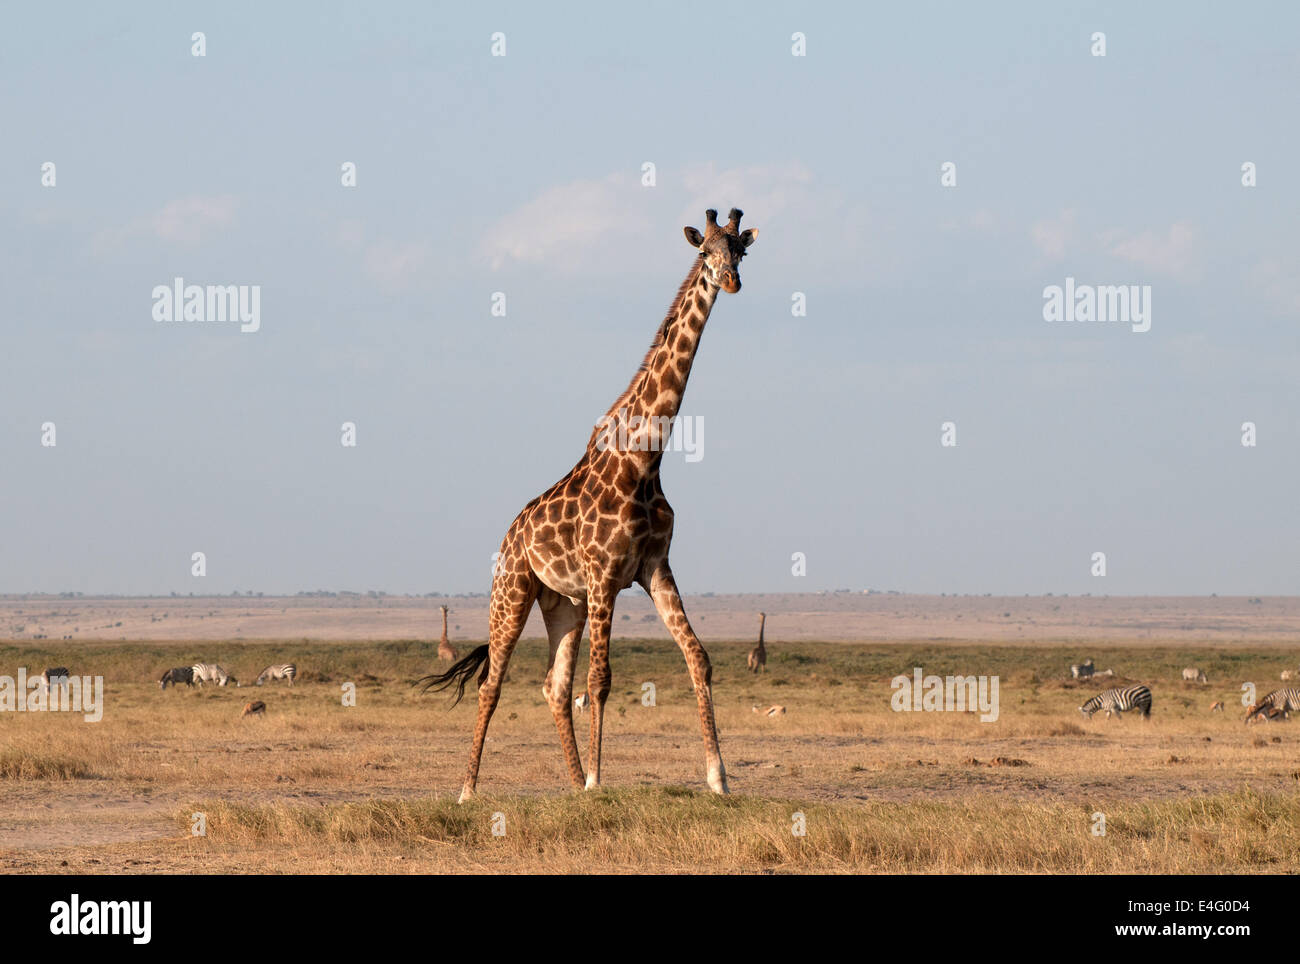 Giraffa comune in Amboseli National Park in Kenya Africa Orientale due comuni GIRAFFE AMBOSELI KENYA Foto Stock